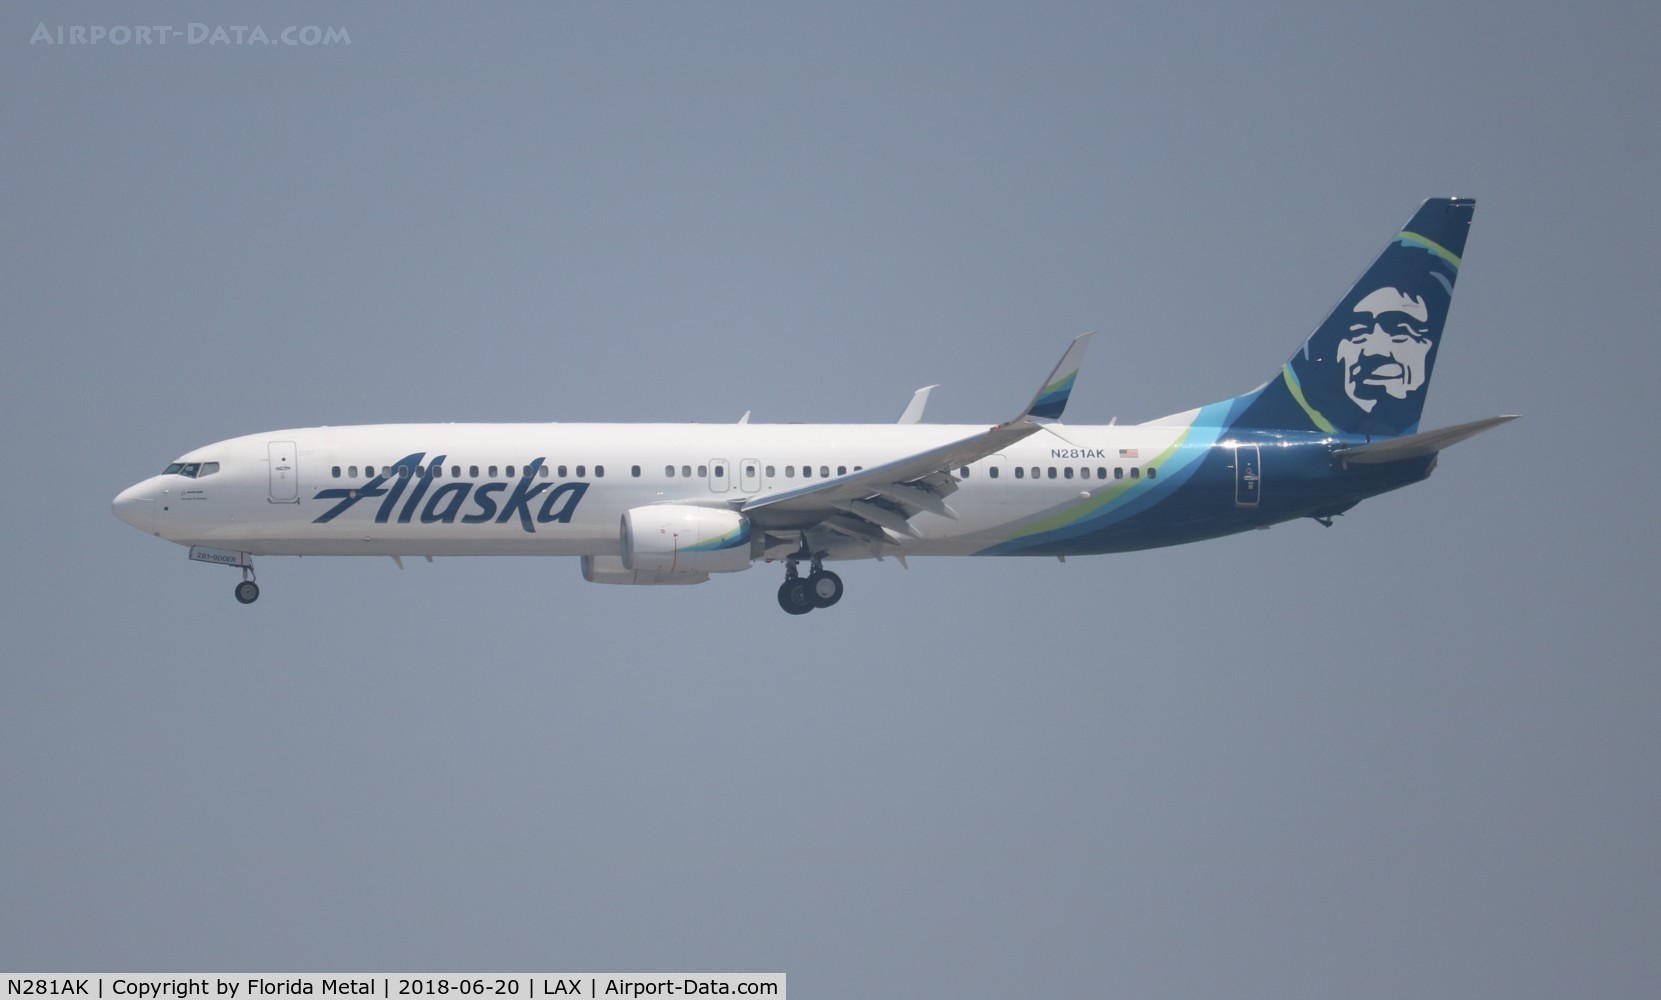 N281AK, 2017 Boeing 737-900/ER C/N 62679, Alaska